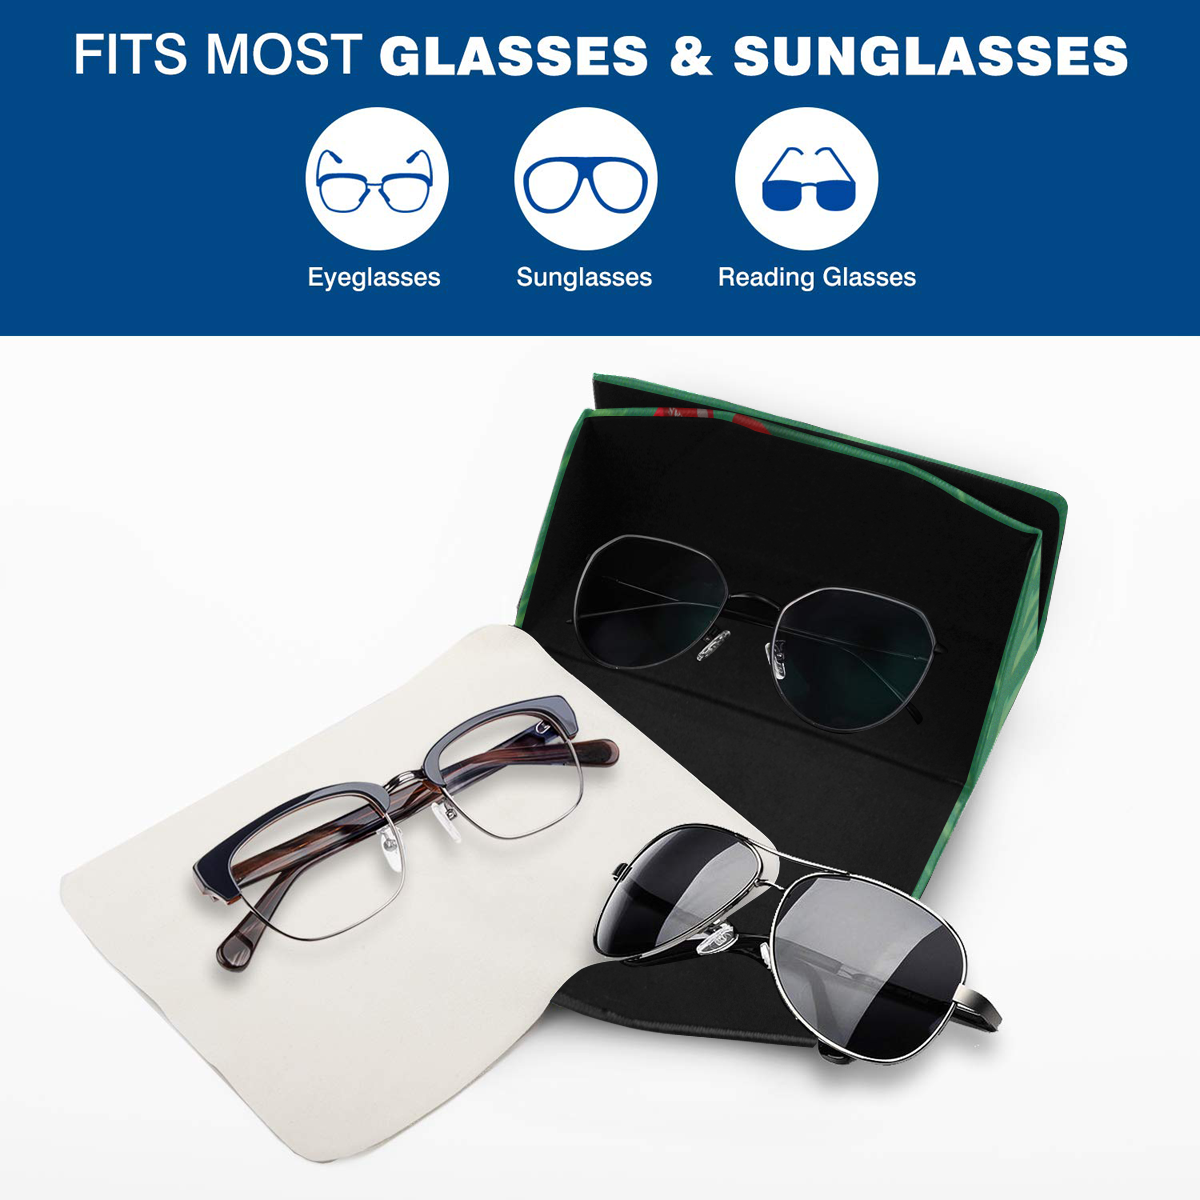 Las Vegas Dice on Craps Table Custom Foldable Glasses Case